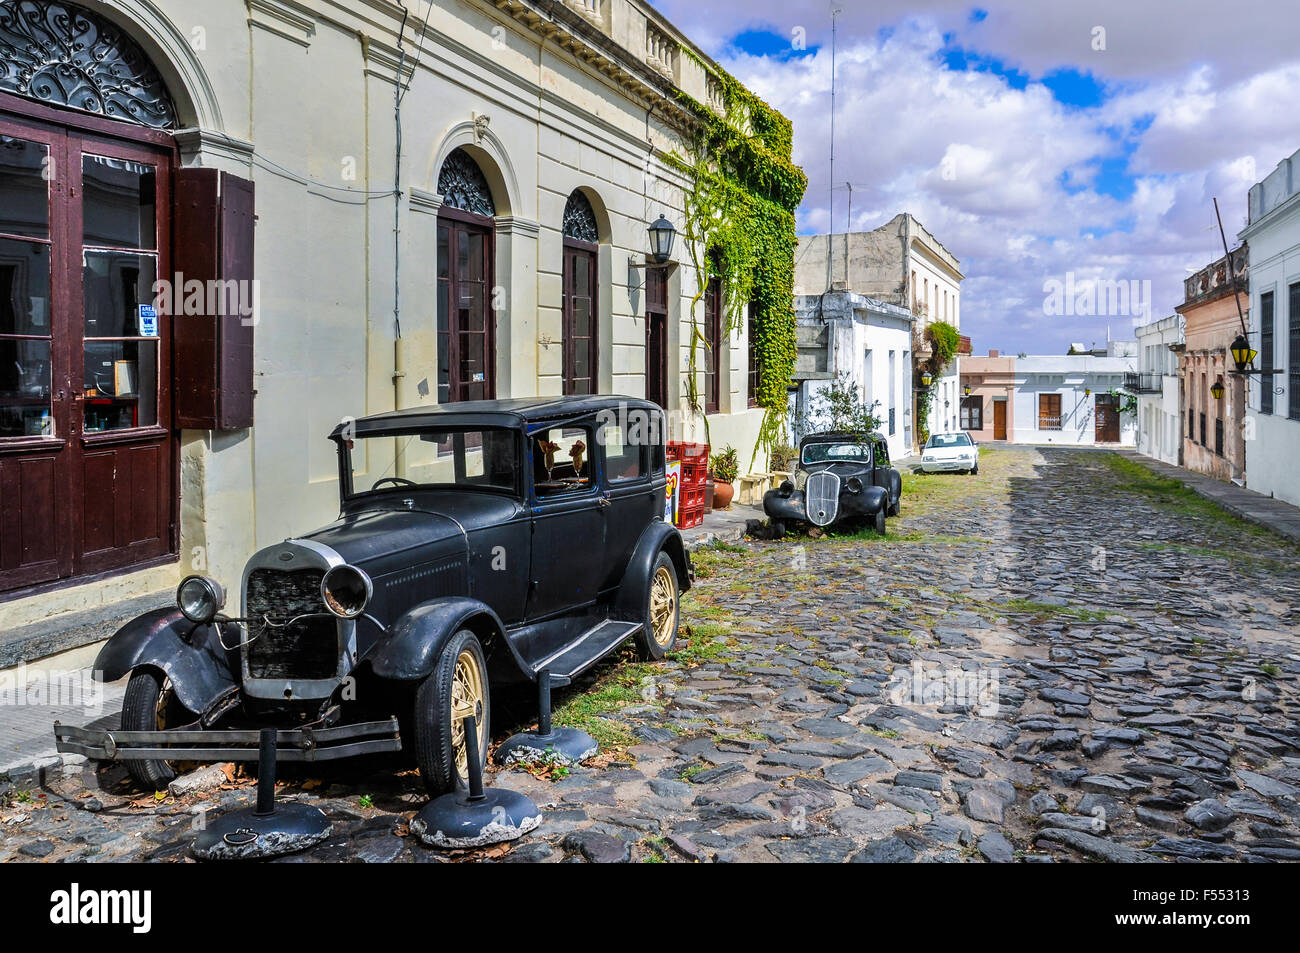 Old black automobile on the street of Colonia del Sacramento, a colonial city in Uruguay. Stock Photo